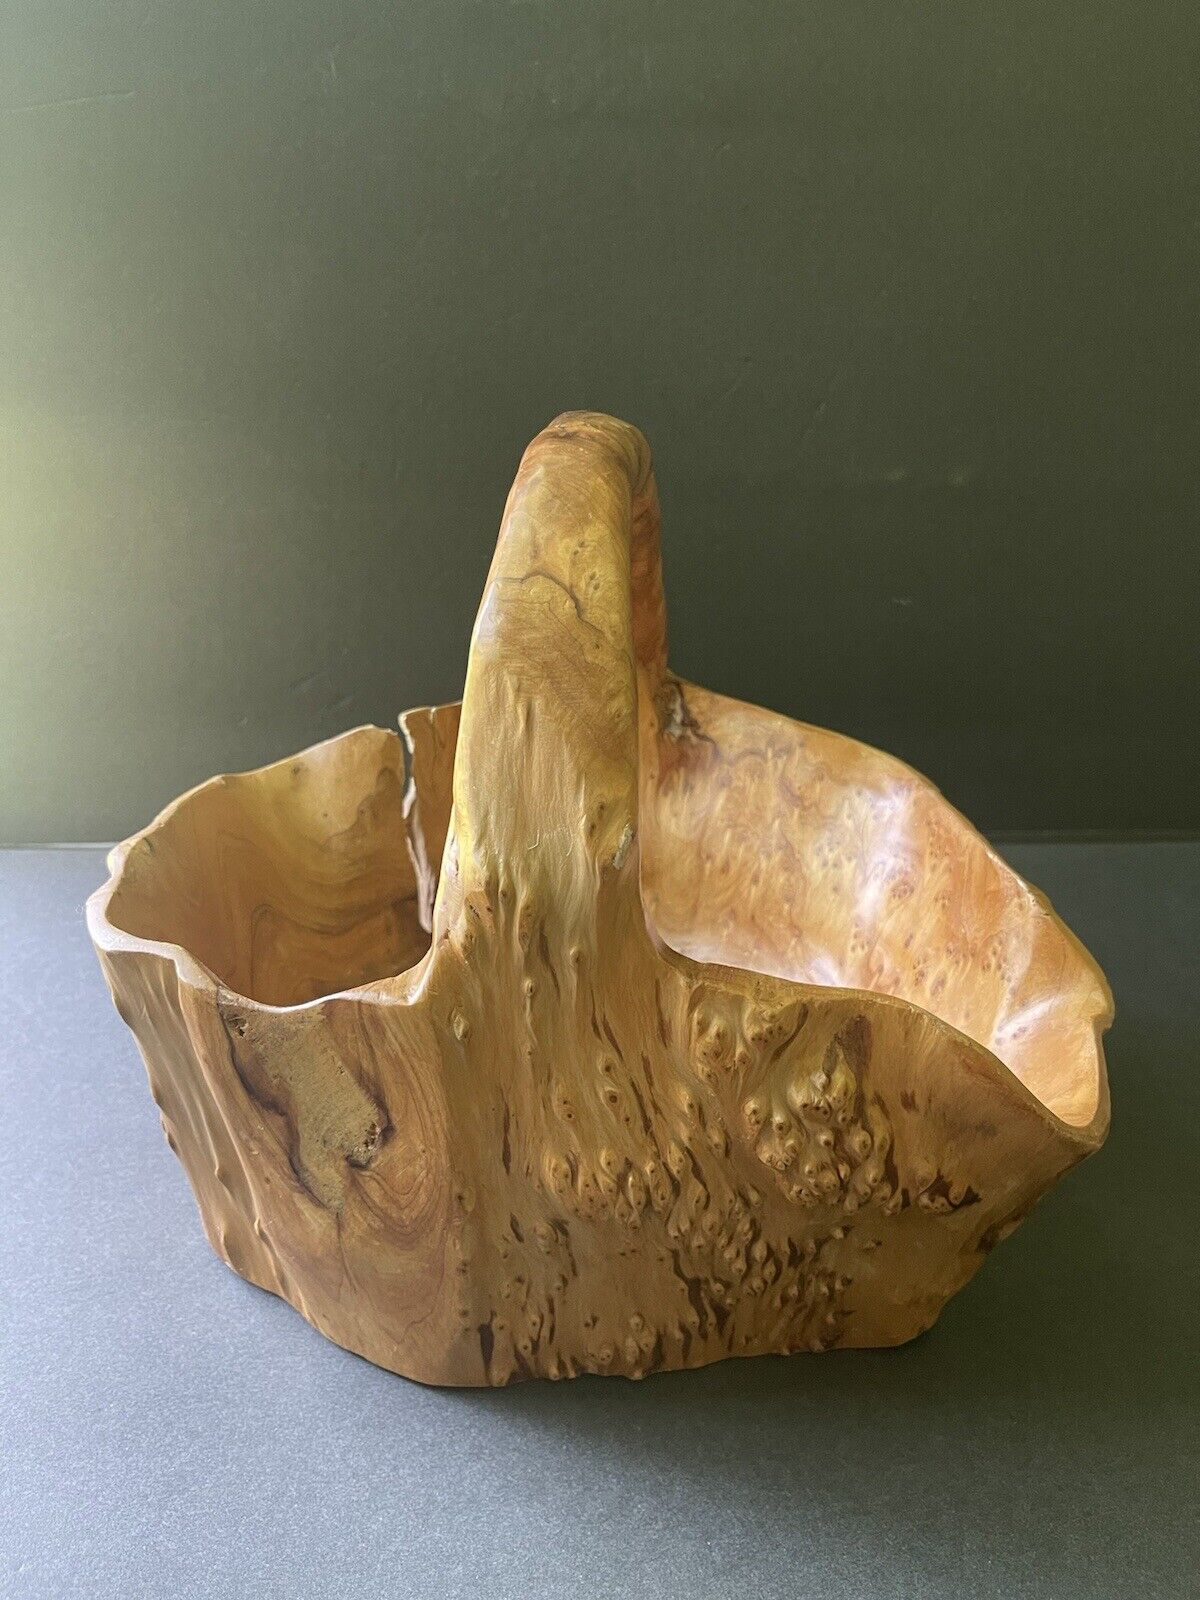 Vintage Hand Carved Bowl Basket Knobby Burl Wood Rustic Natural Wood Grain